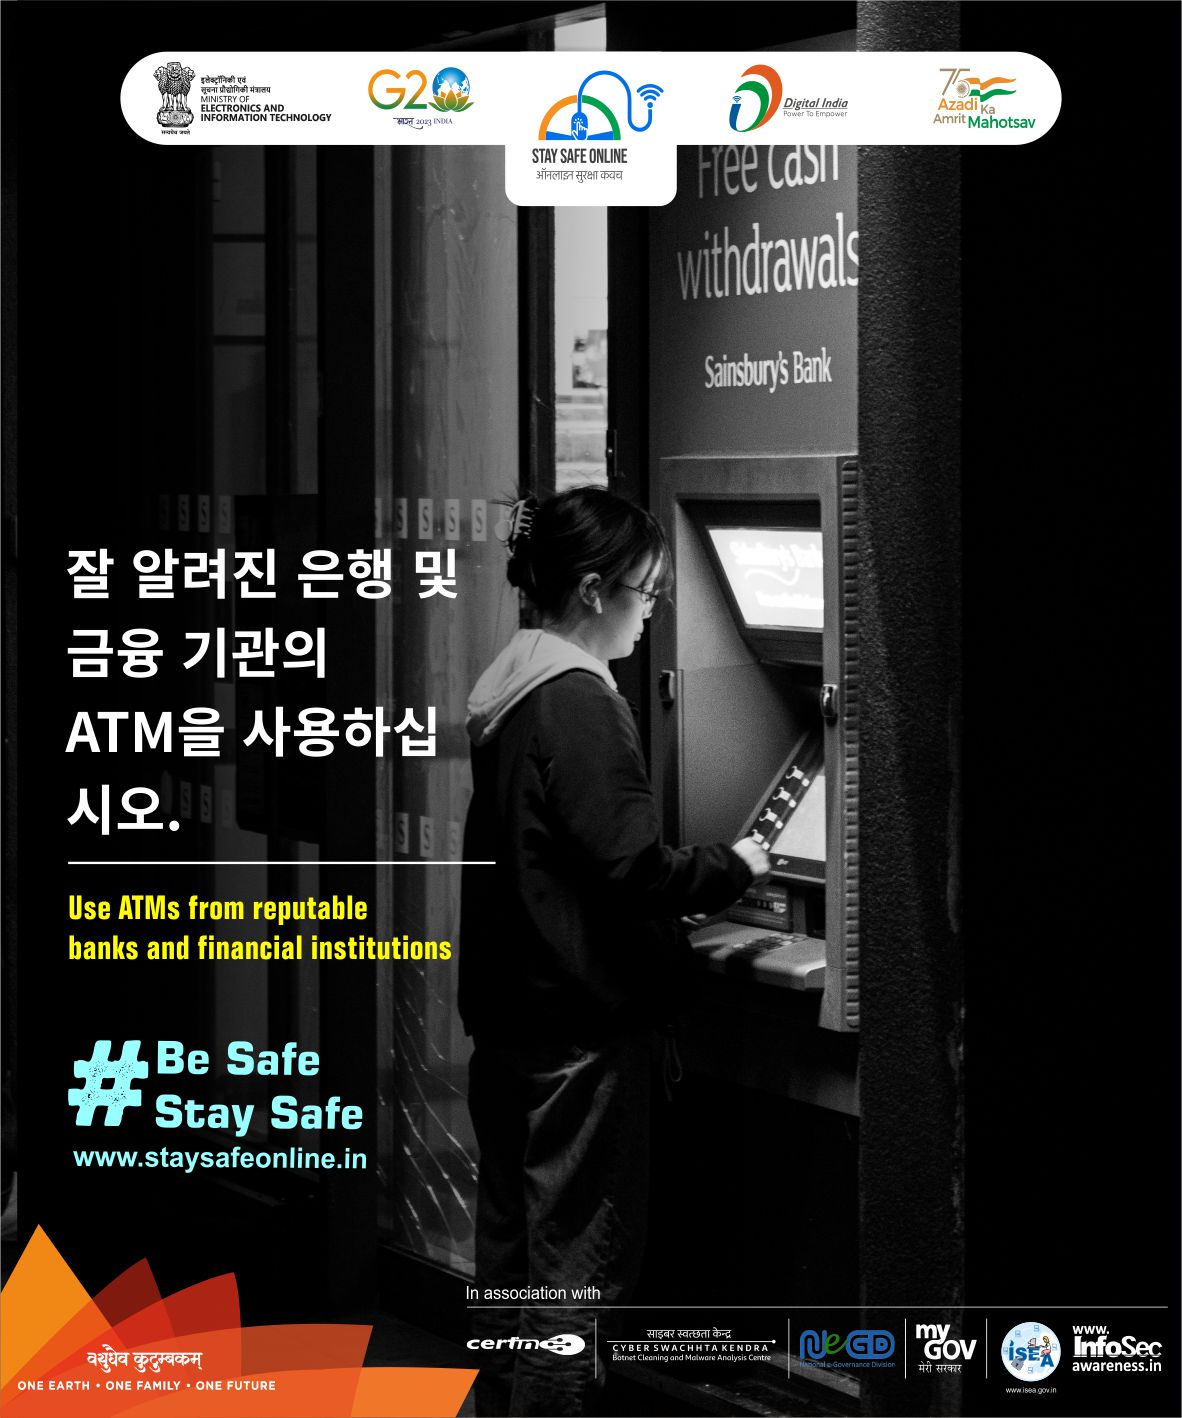 ATM Security